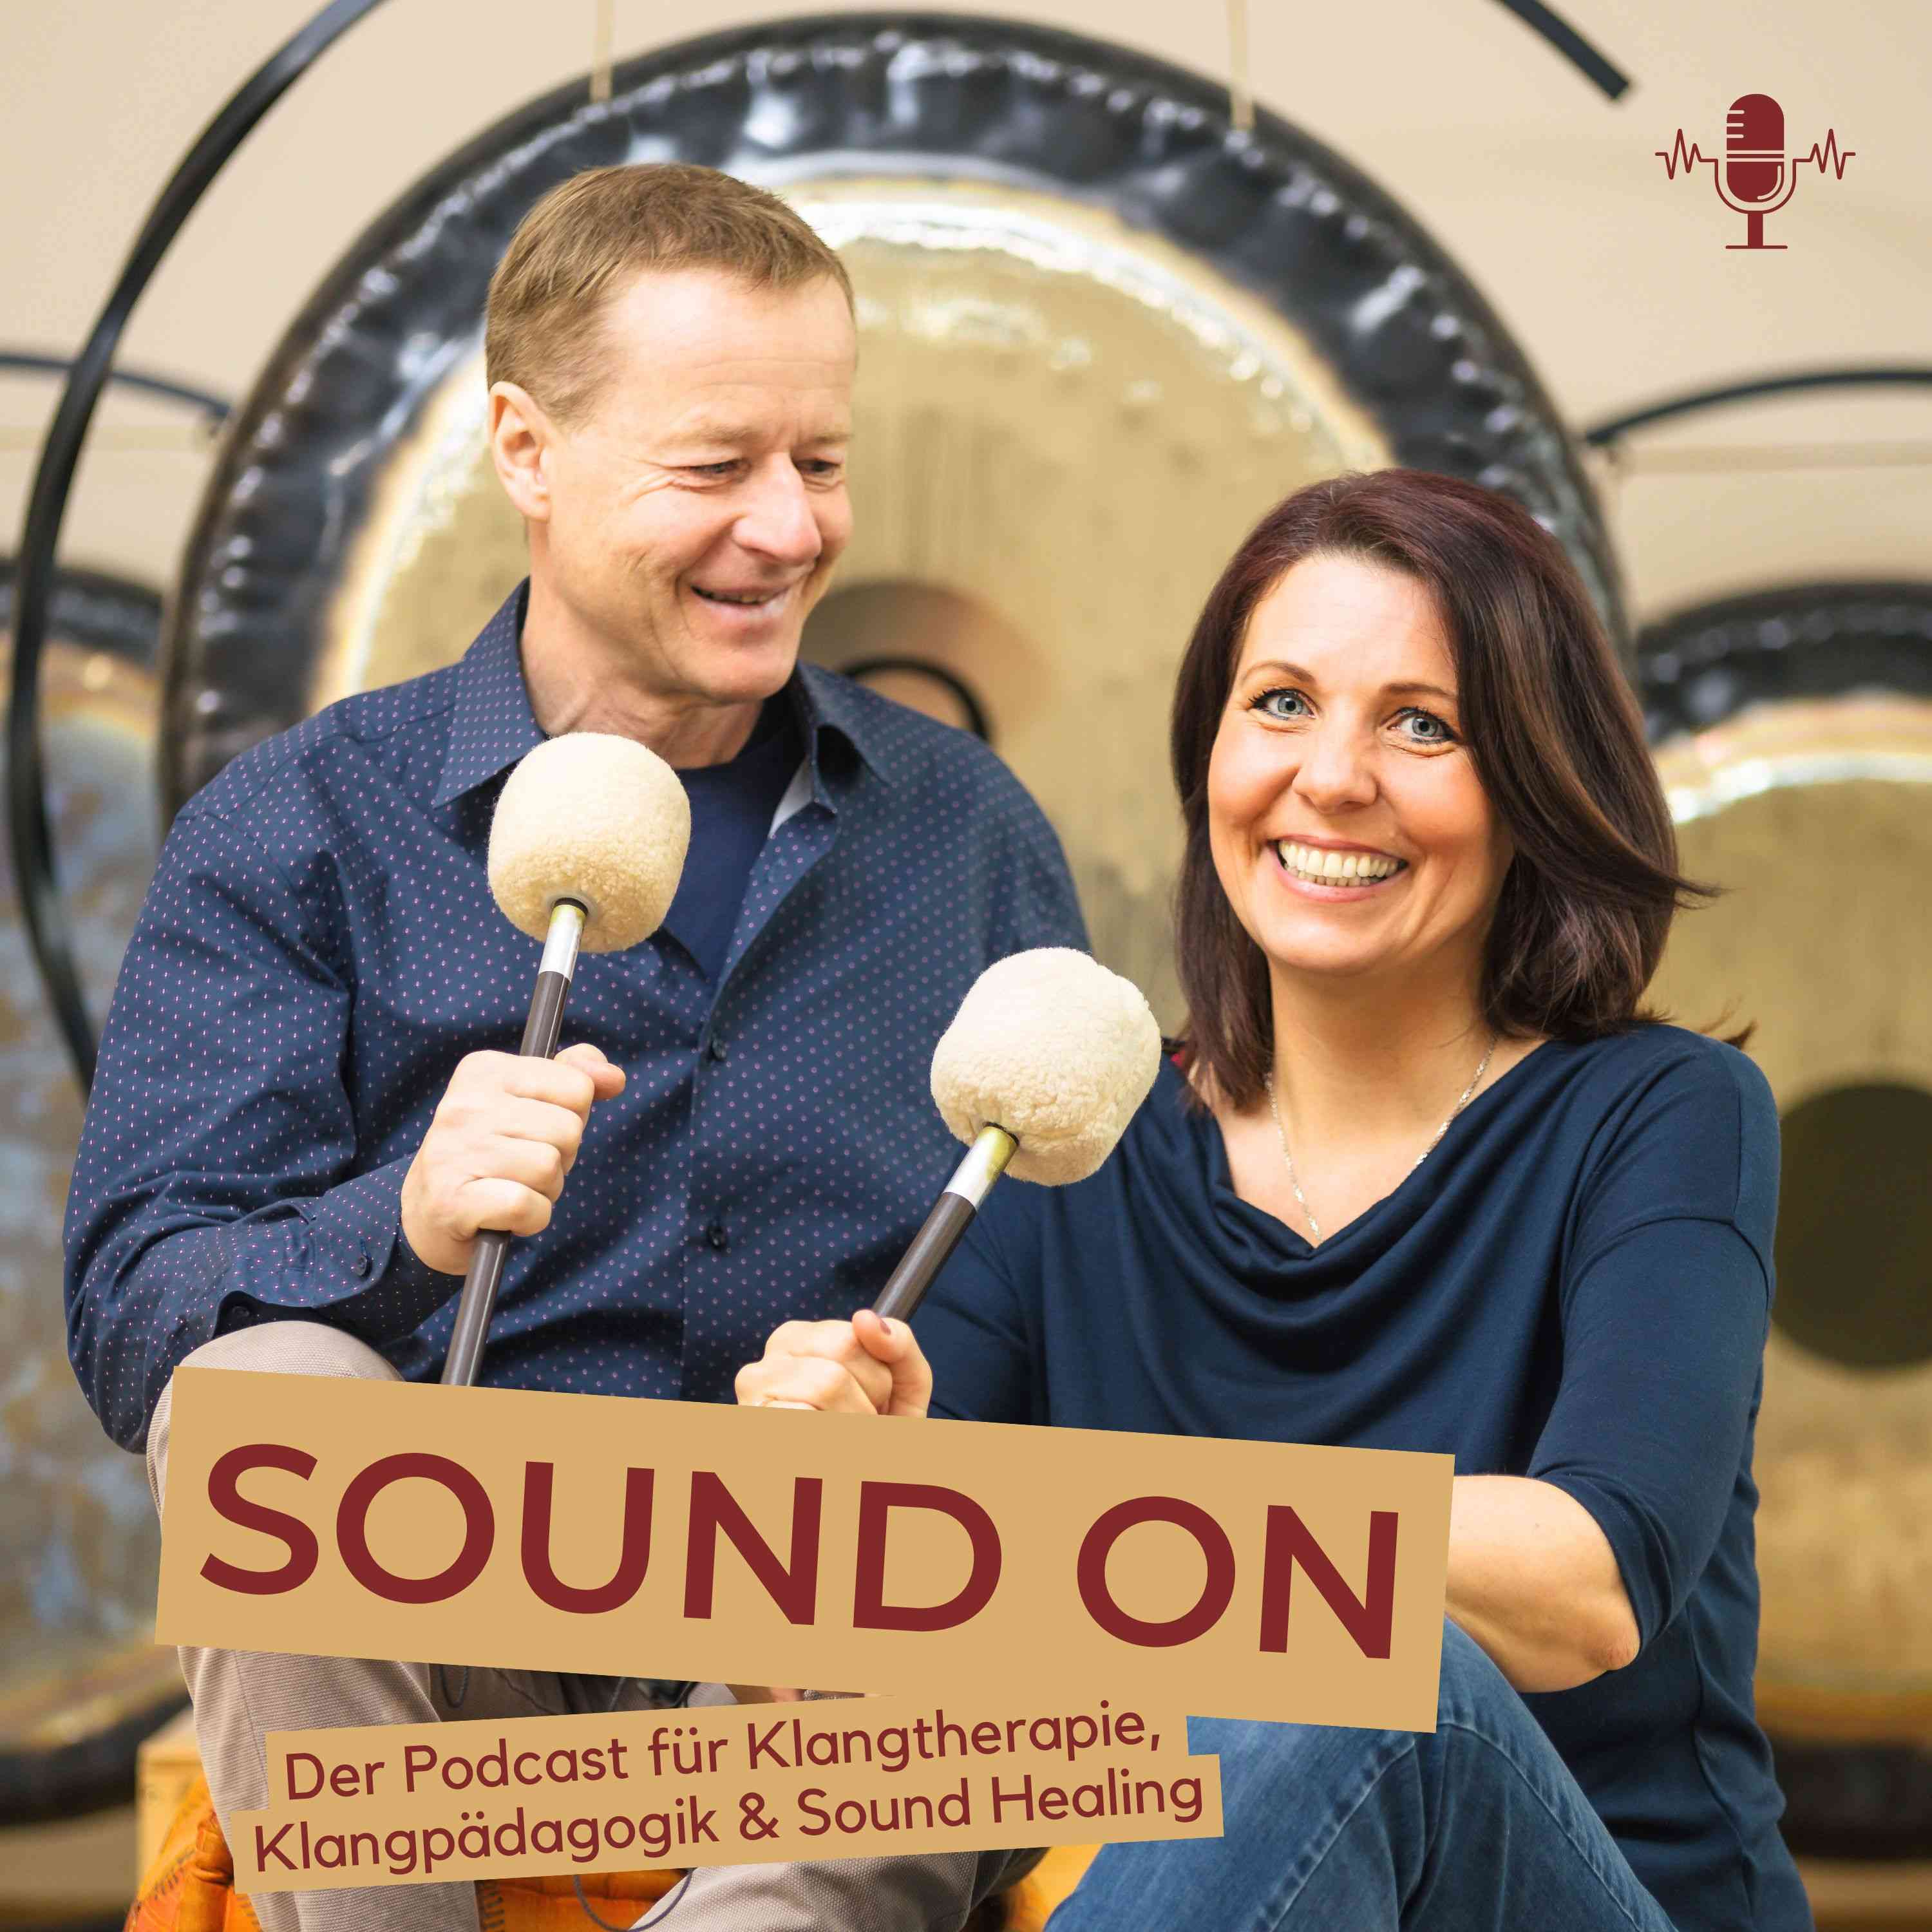 SOUND ON – Der Podcast für Klangtherapie, Klangpädagogik & Sound Healing